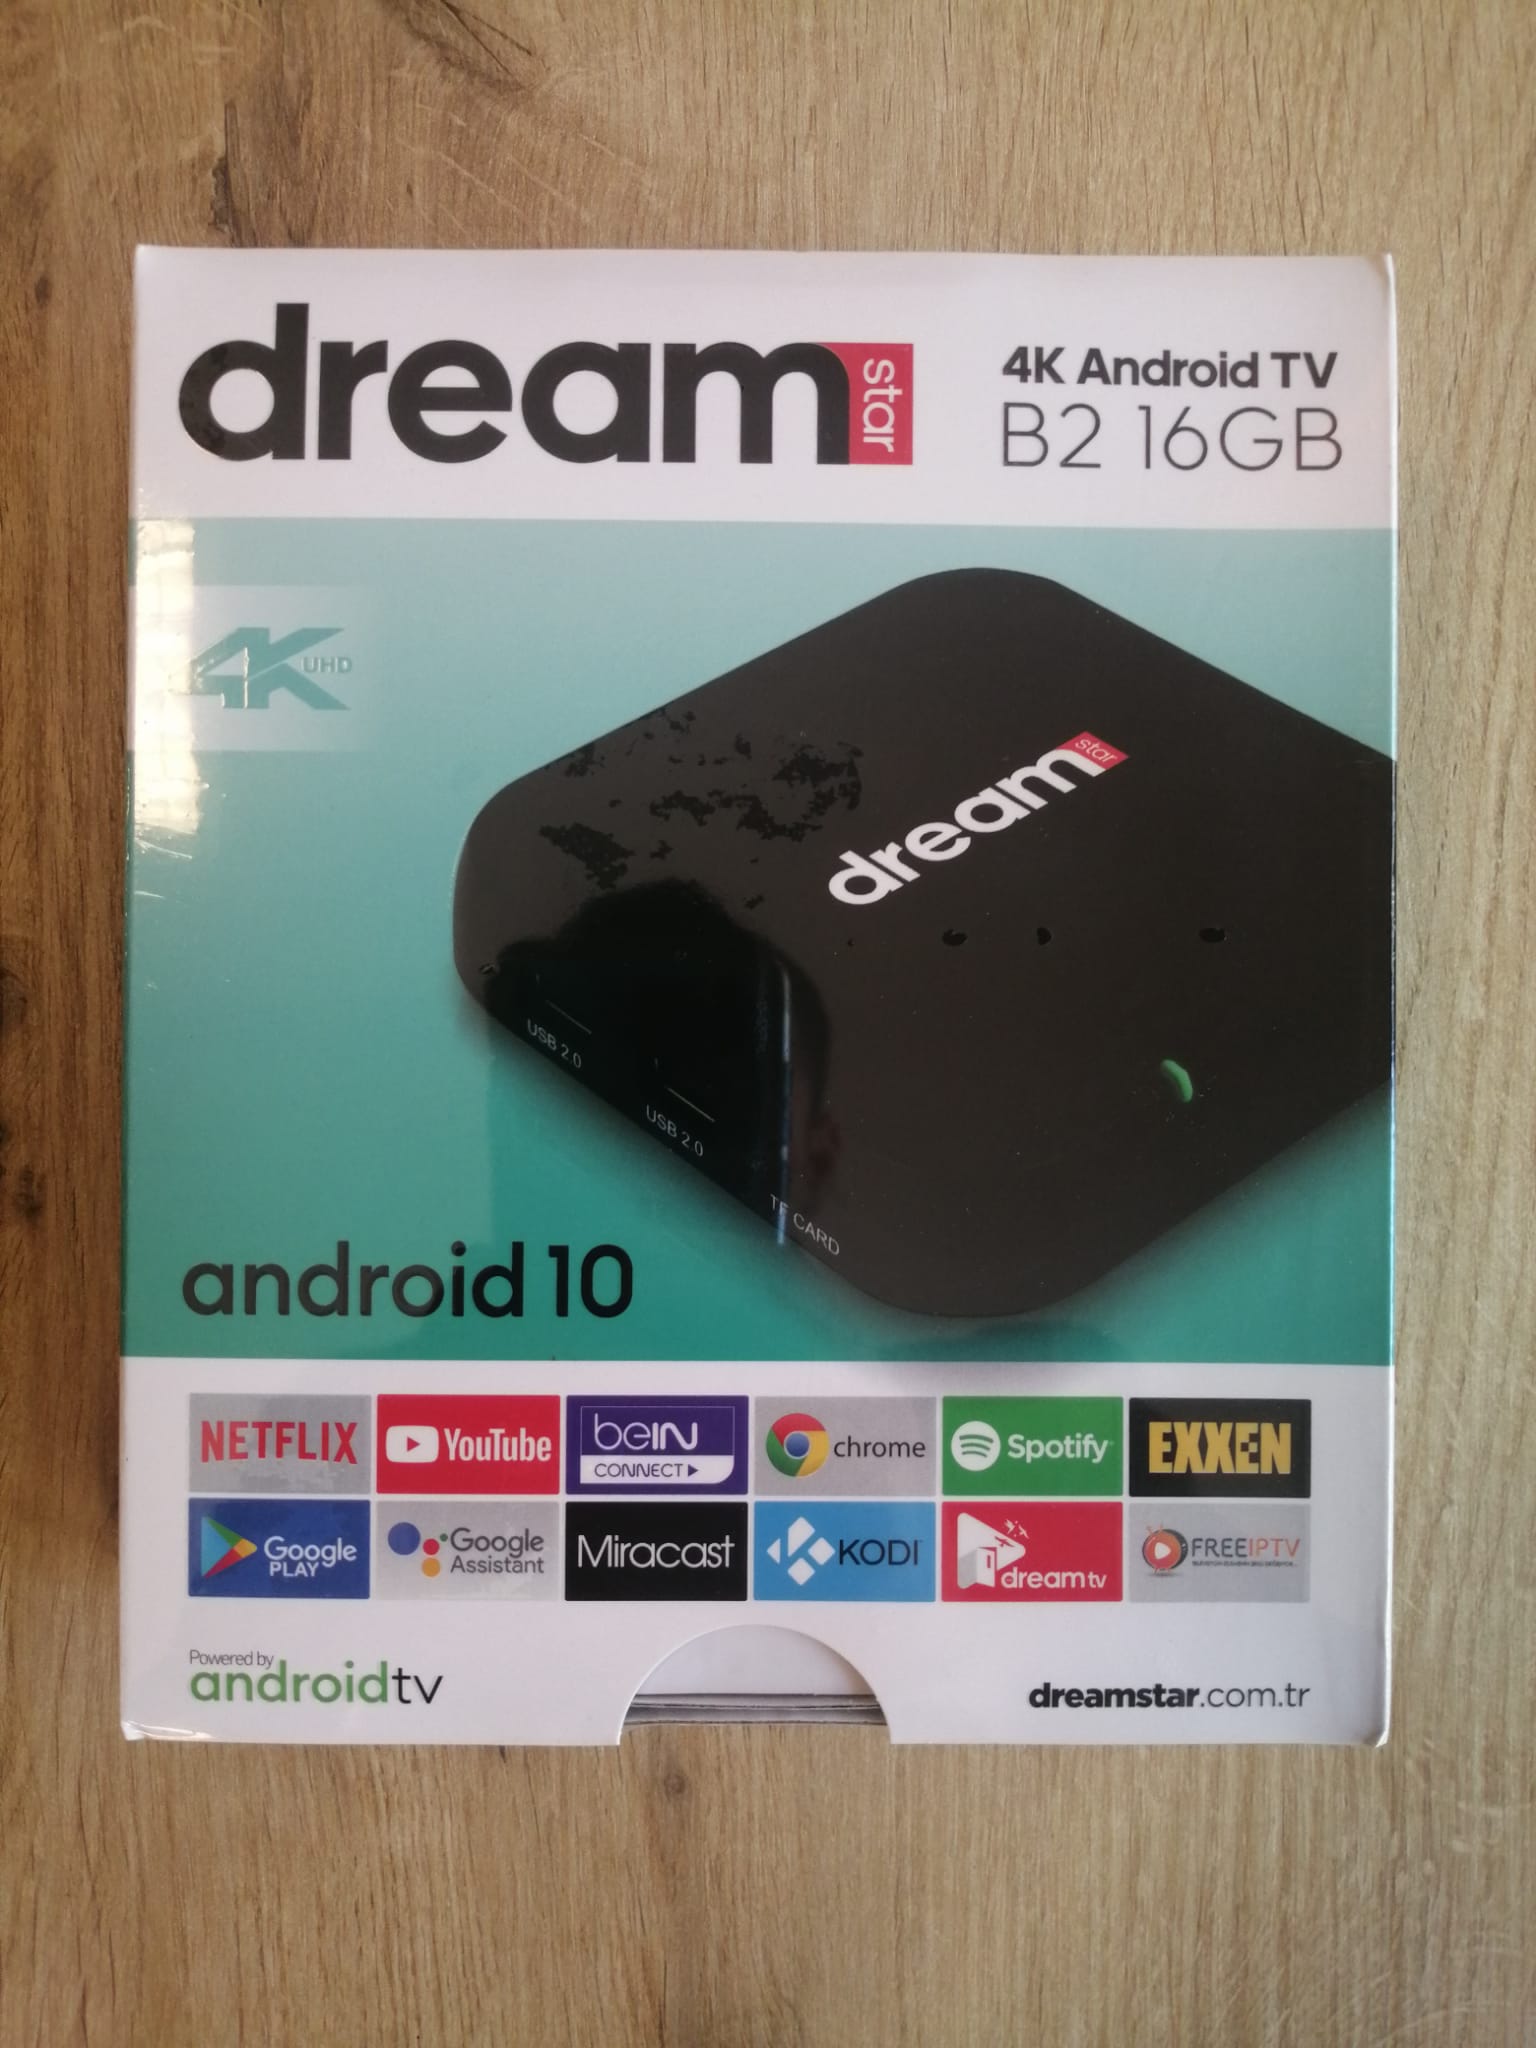 DreamStar 4K Android TV B2 16GB